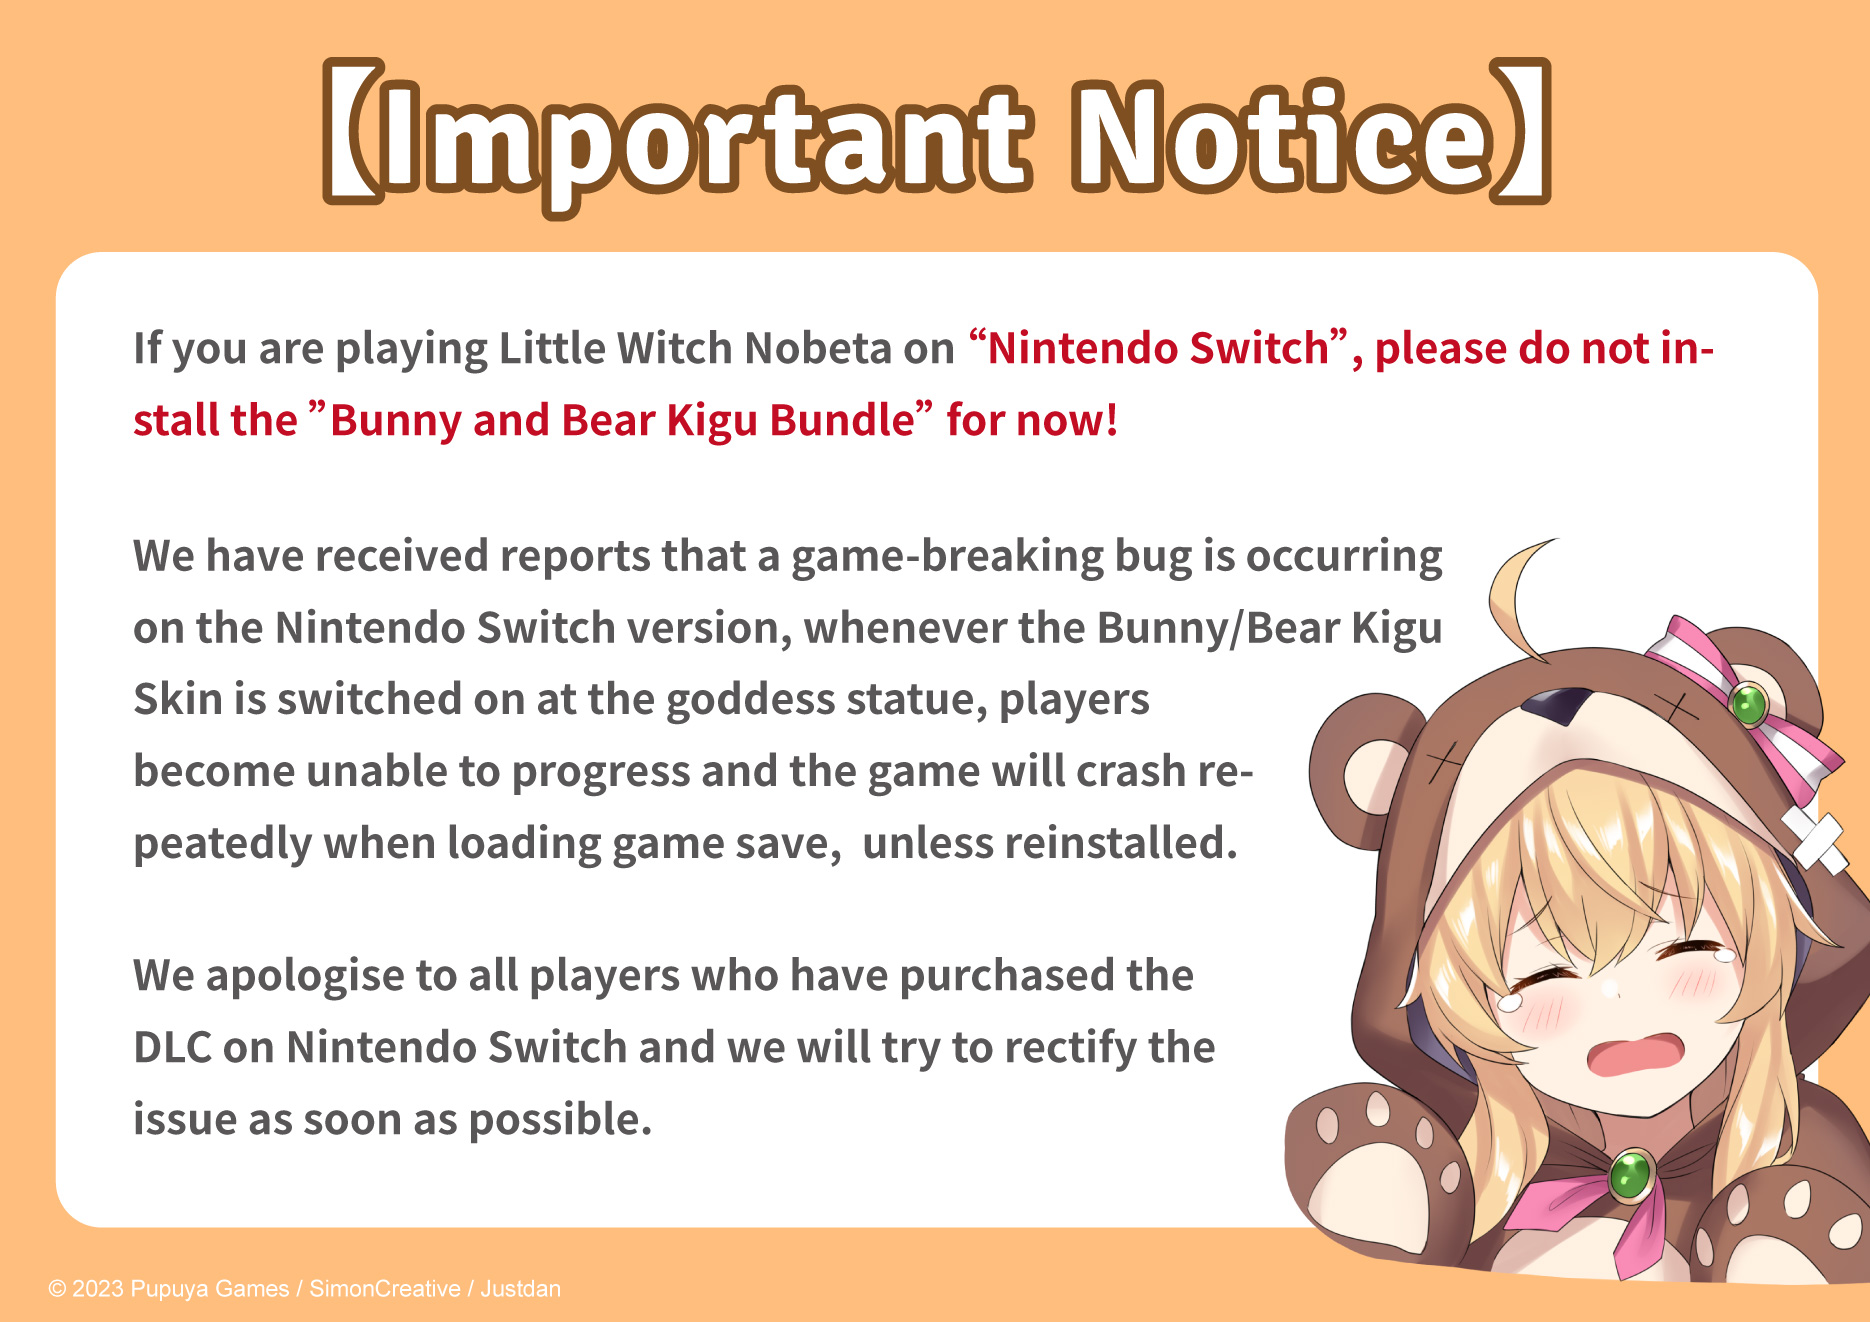 Important Notice Regarding Purchasing Nintendo Switch Games